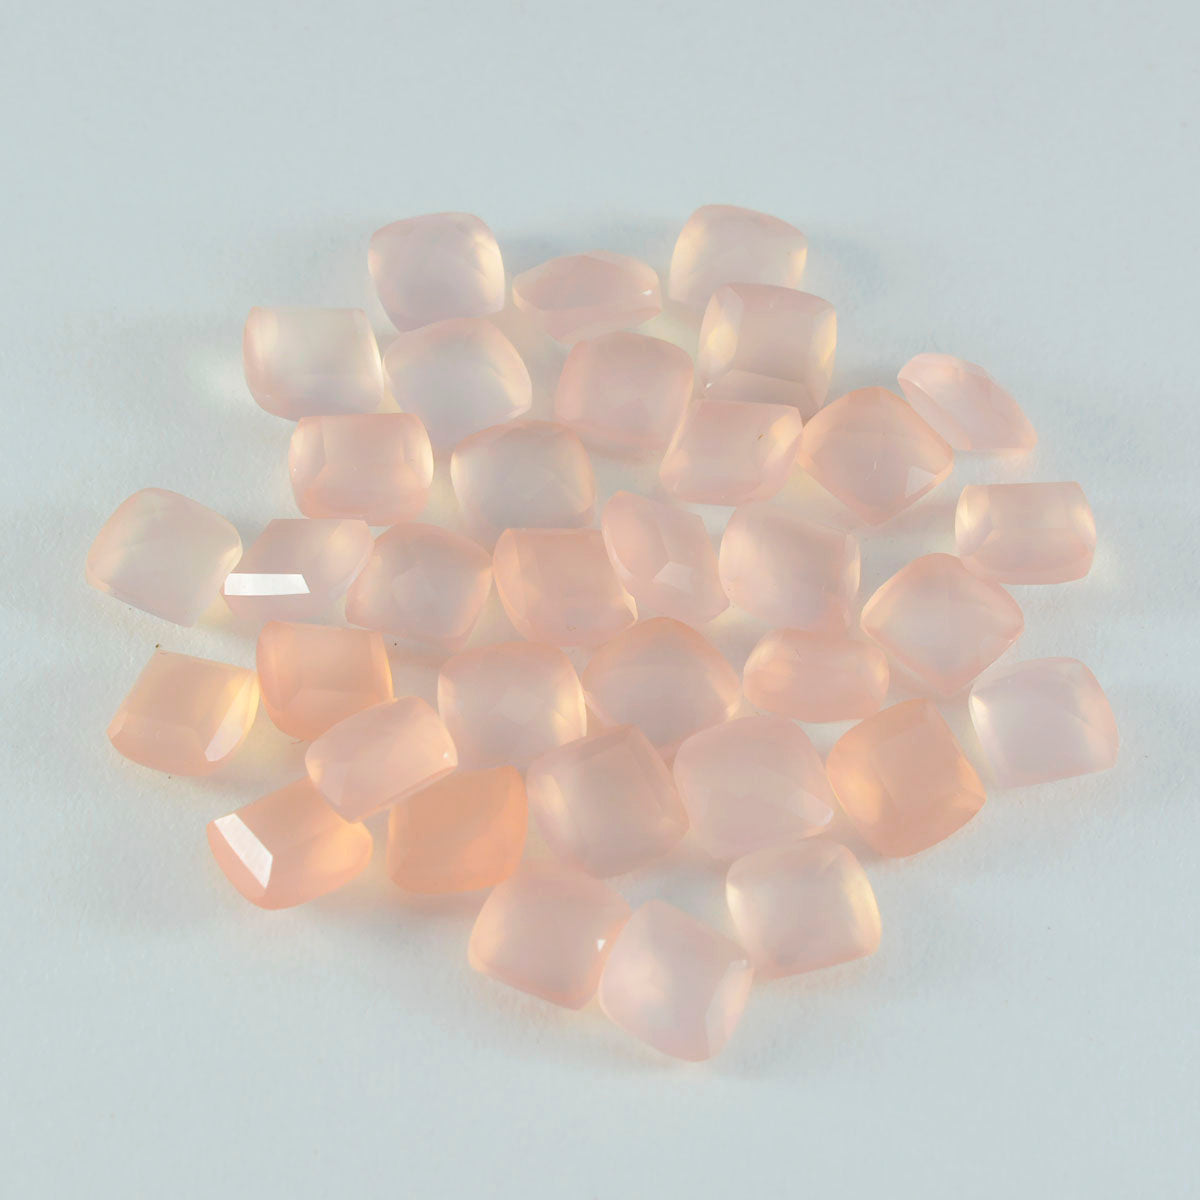 Riyogems 1PC roze rozenkwarts gefacetteerd 8x8 mm kussenvorm uitstekende kwaliteit edelsteen